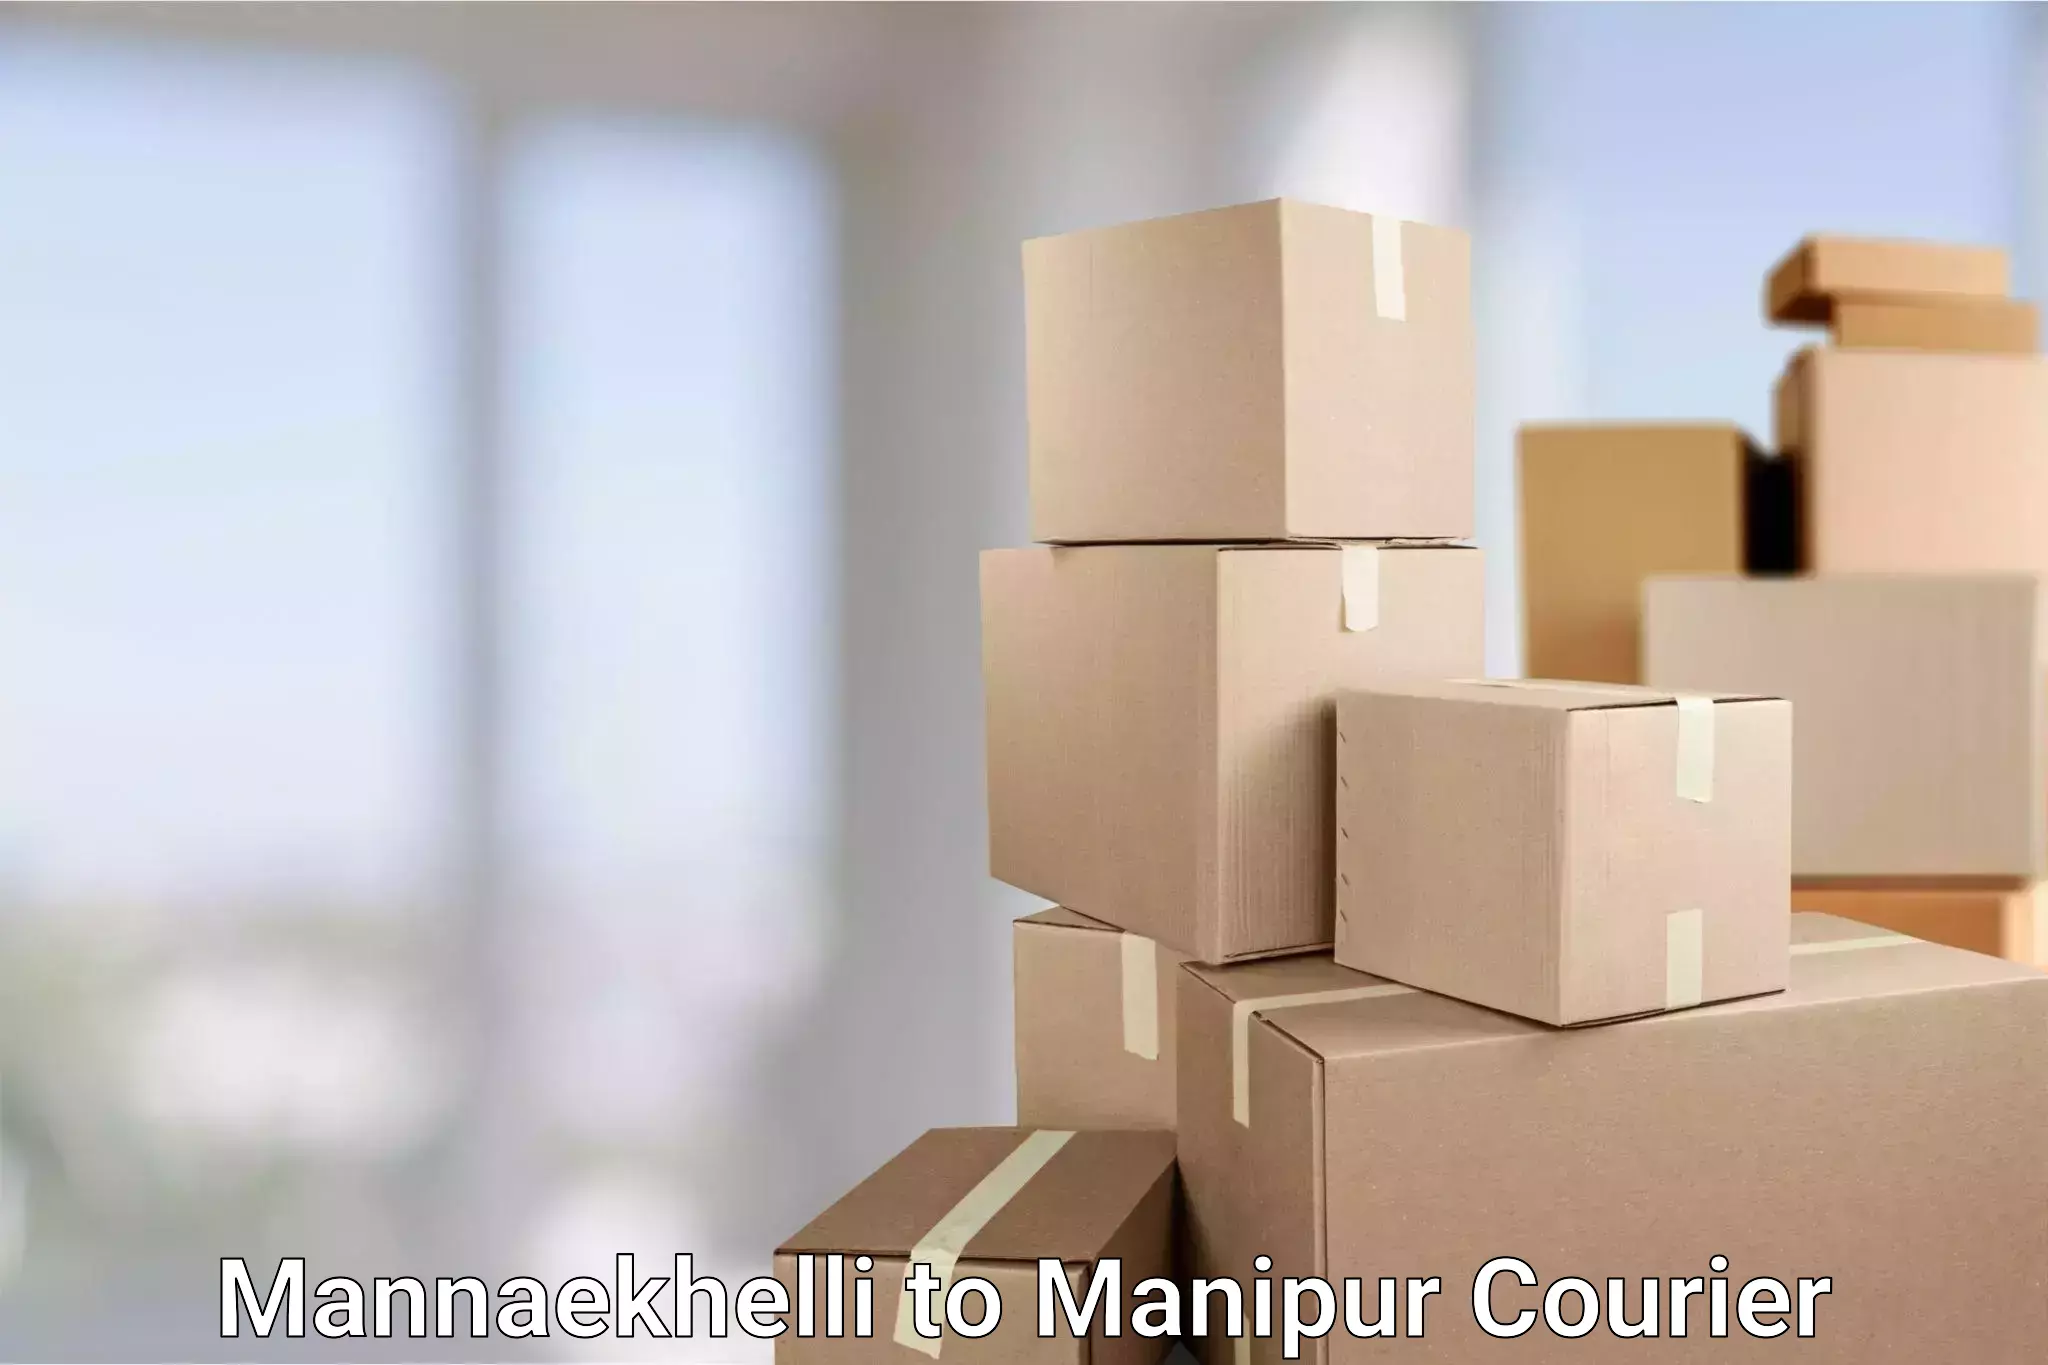 Bulk shipping discounts Mannaekhelli to Manipur